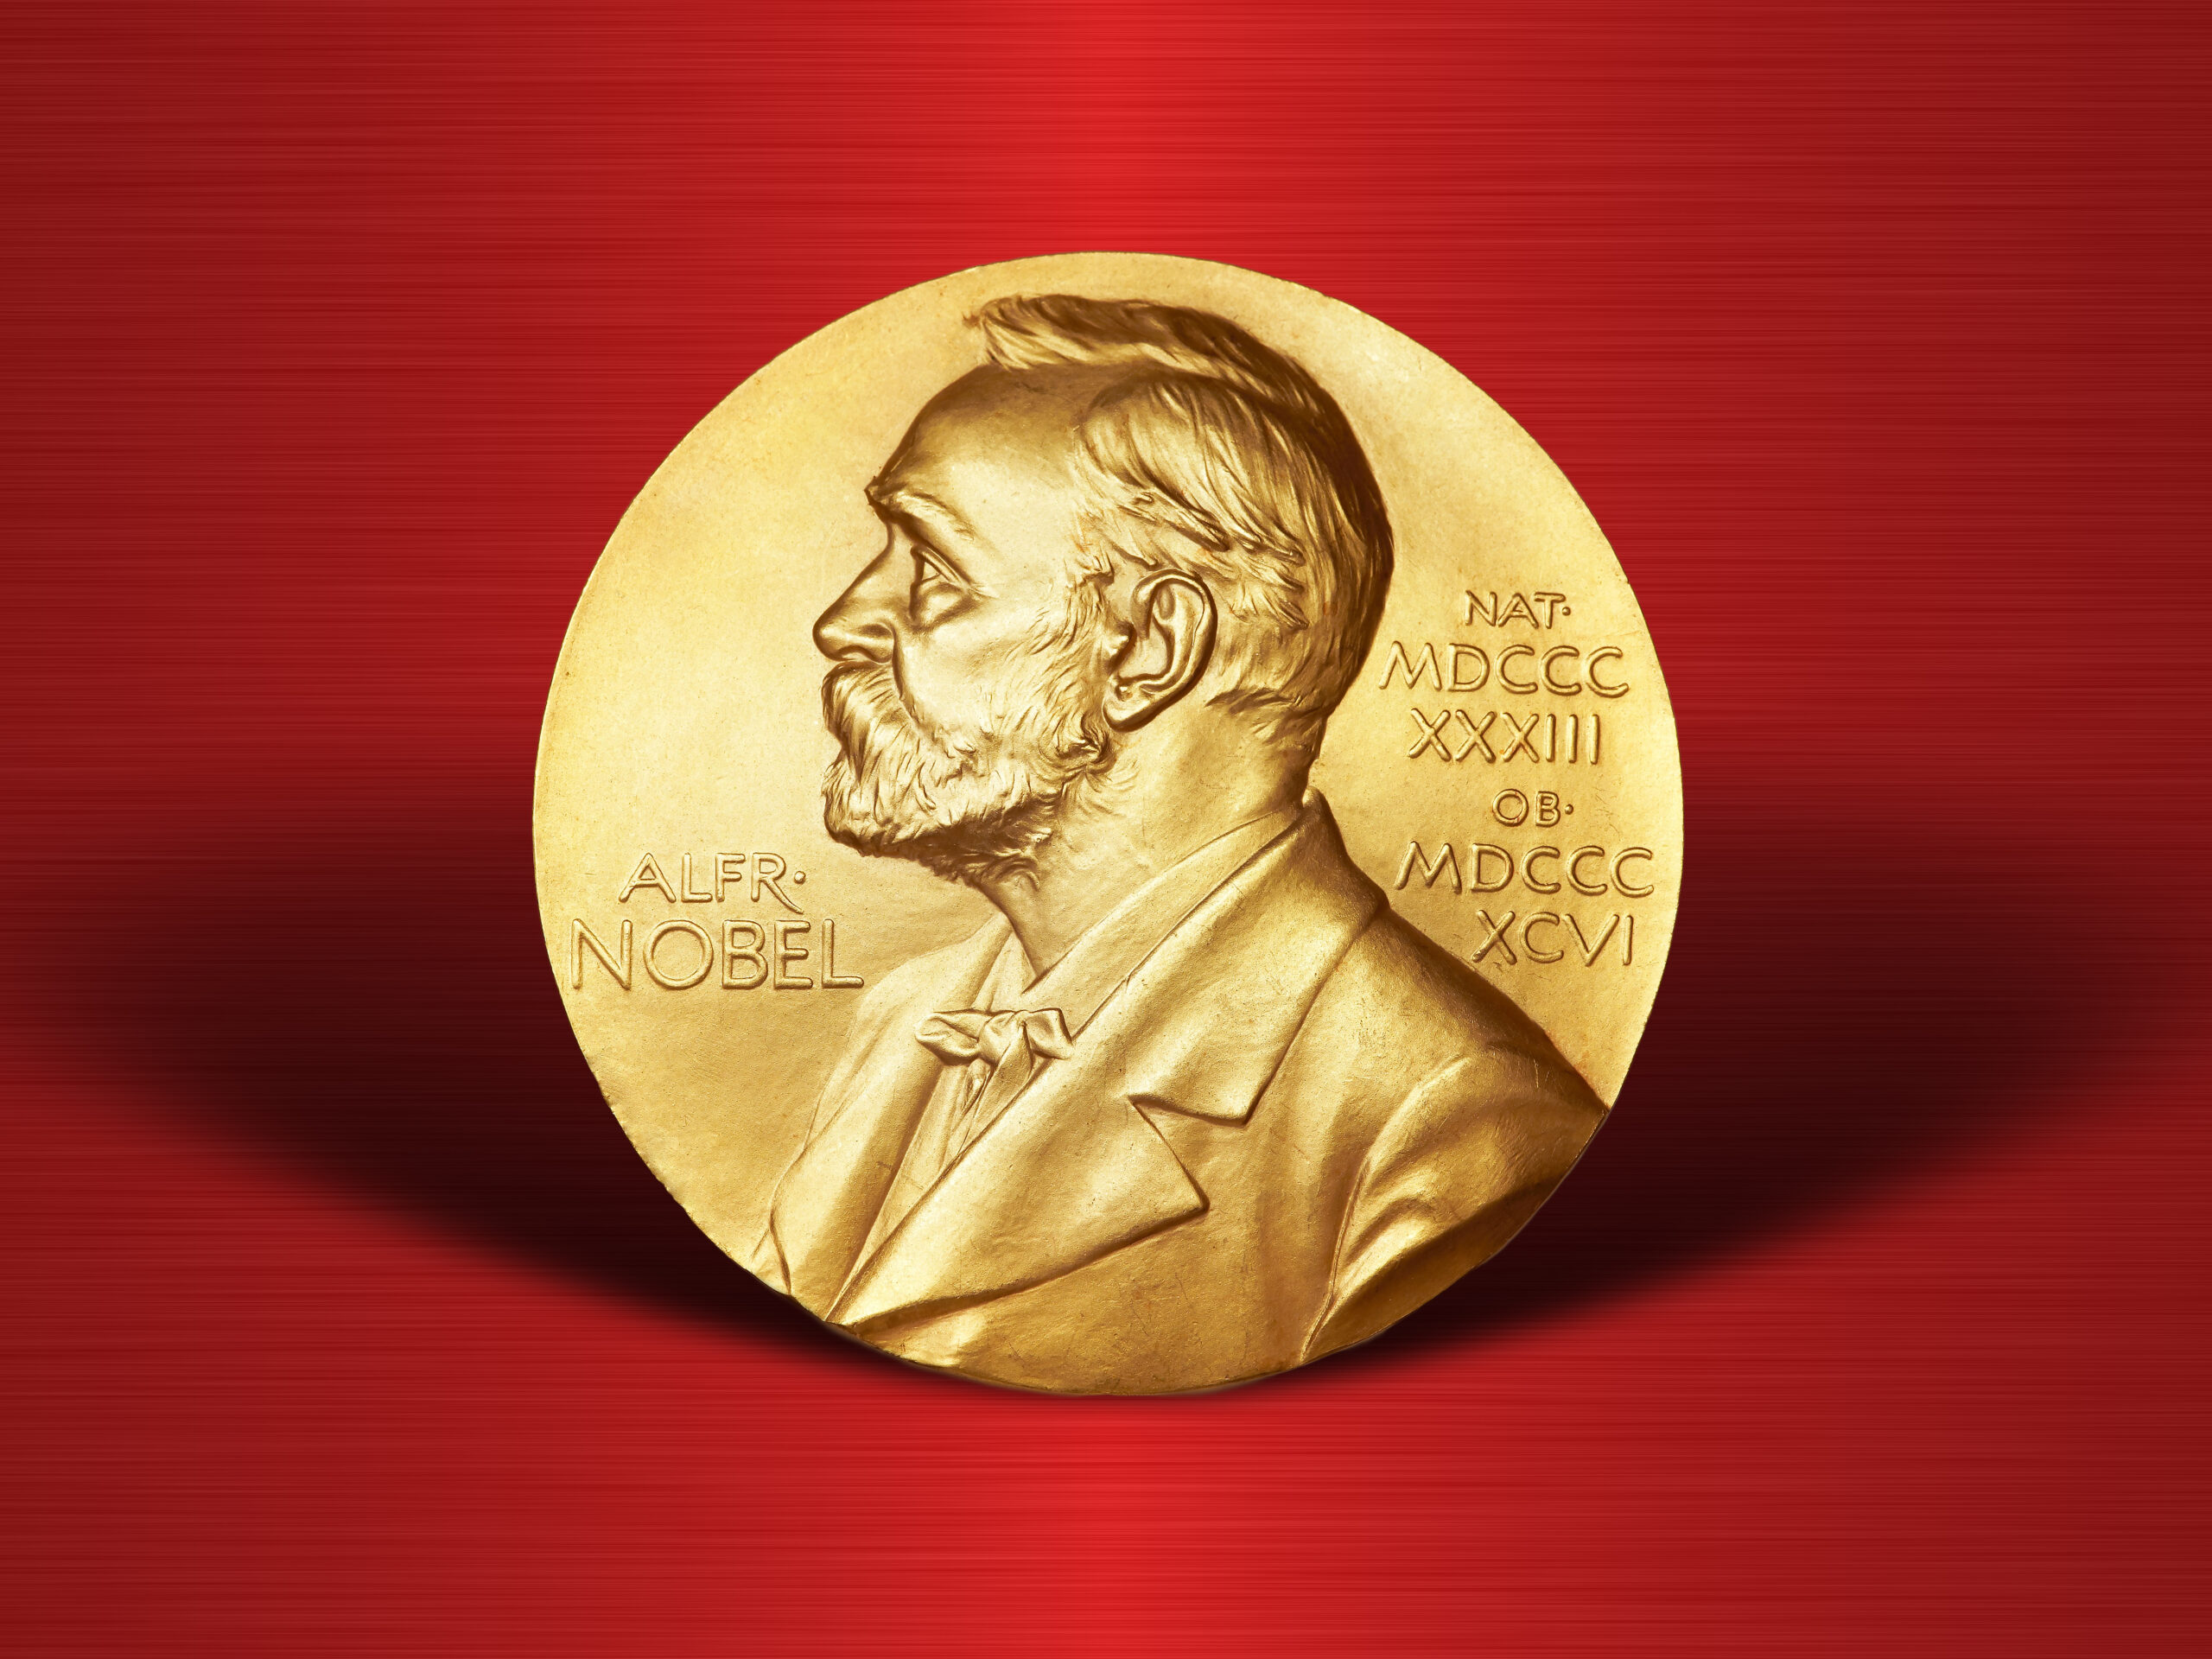 Nobel Peace Prize medallion